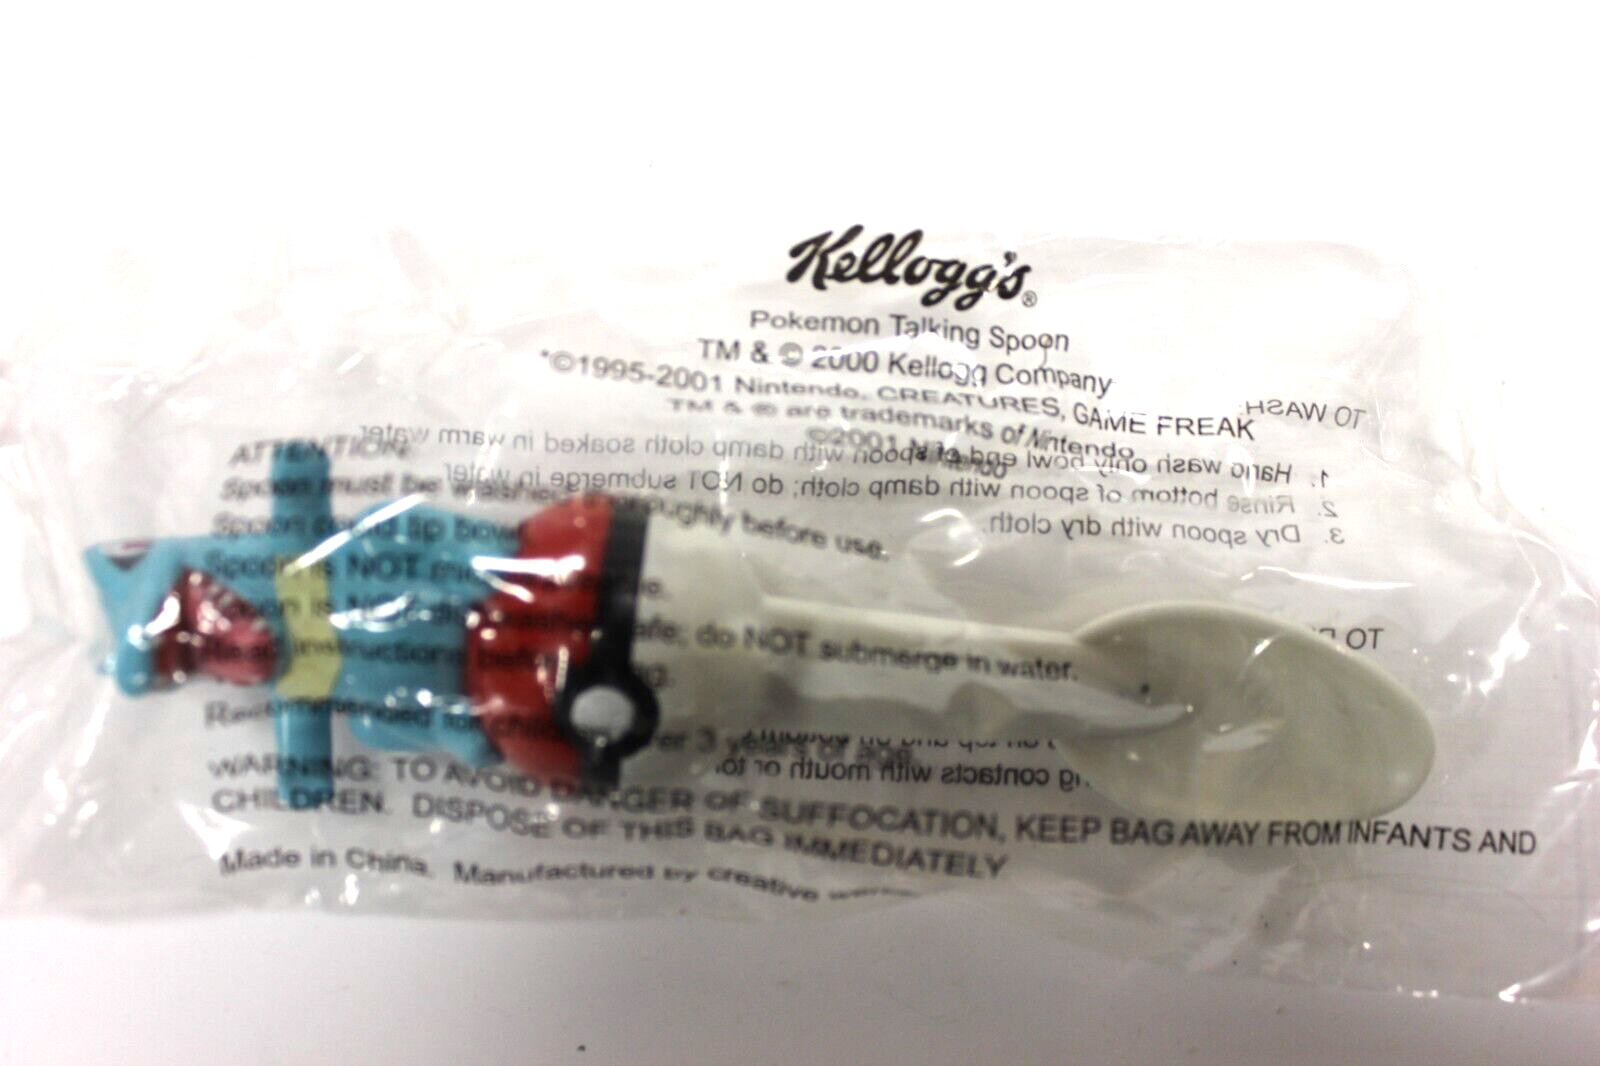 RARE 2000 Kellogg\'s Pokémon TOTODILE Talking Spoon - Factory Sealed Packaging